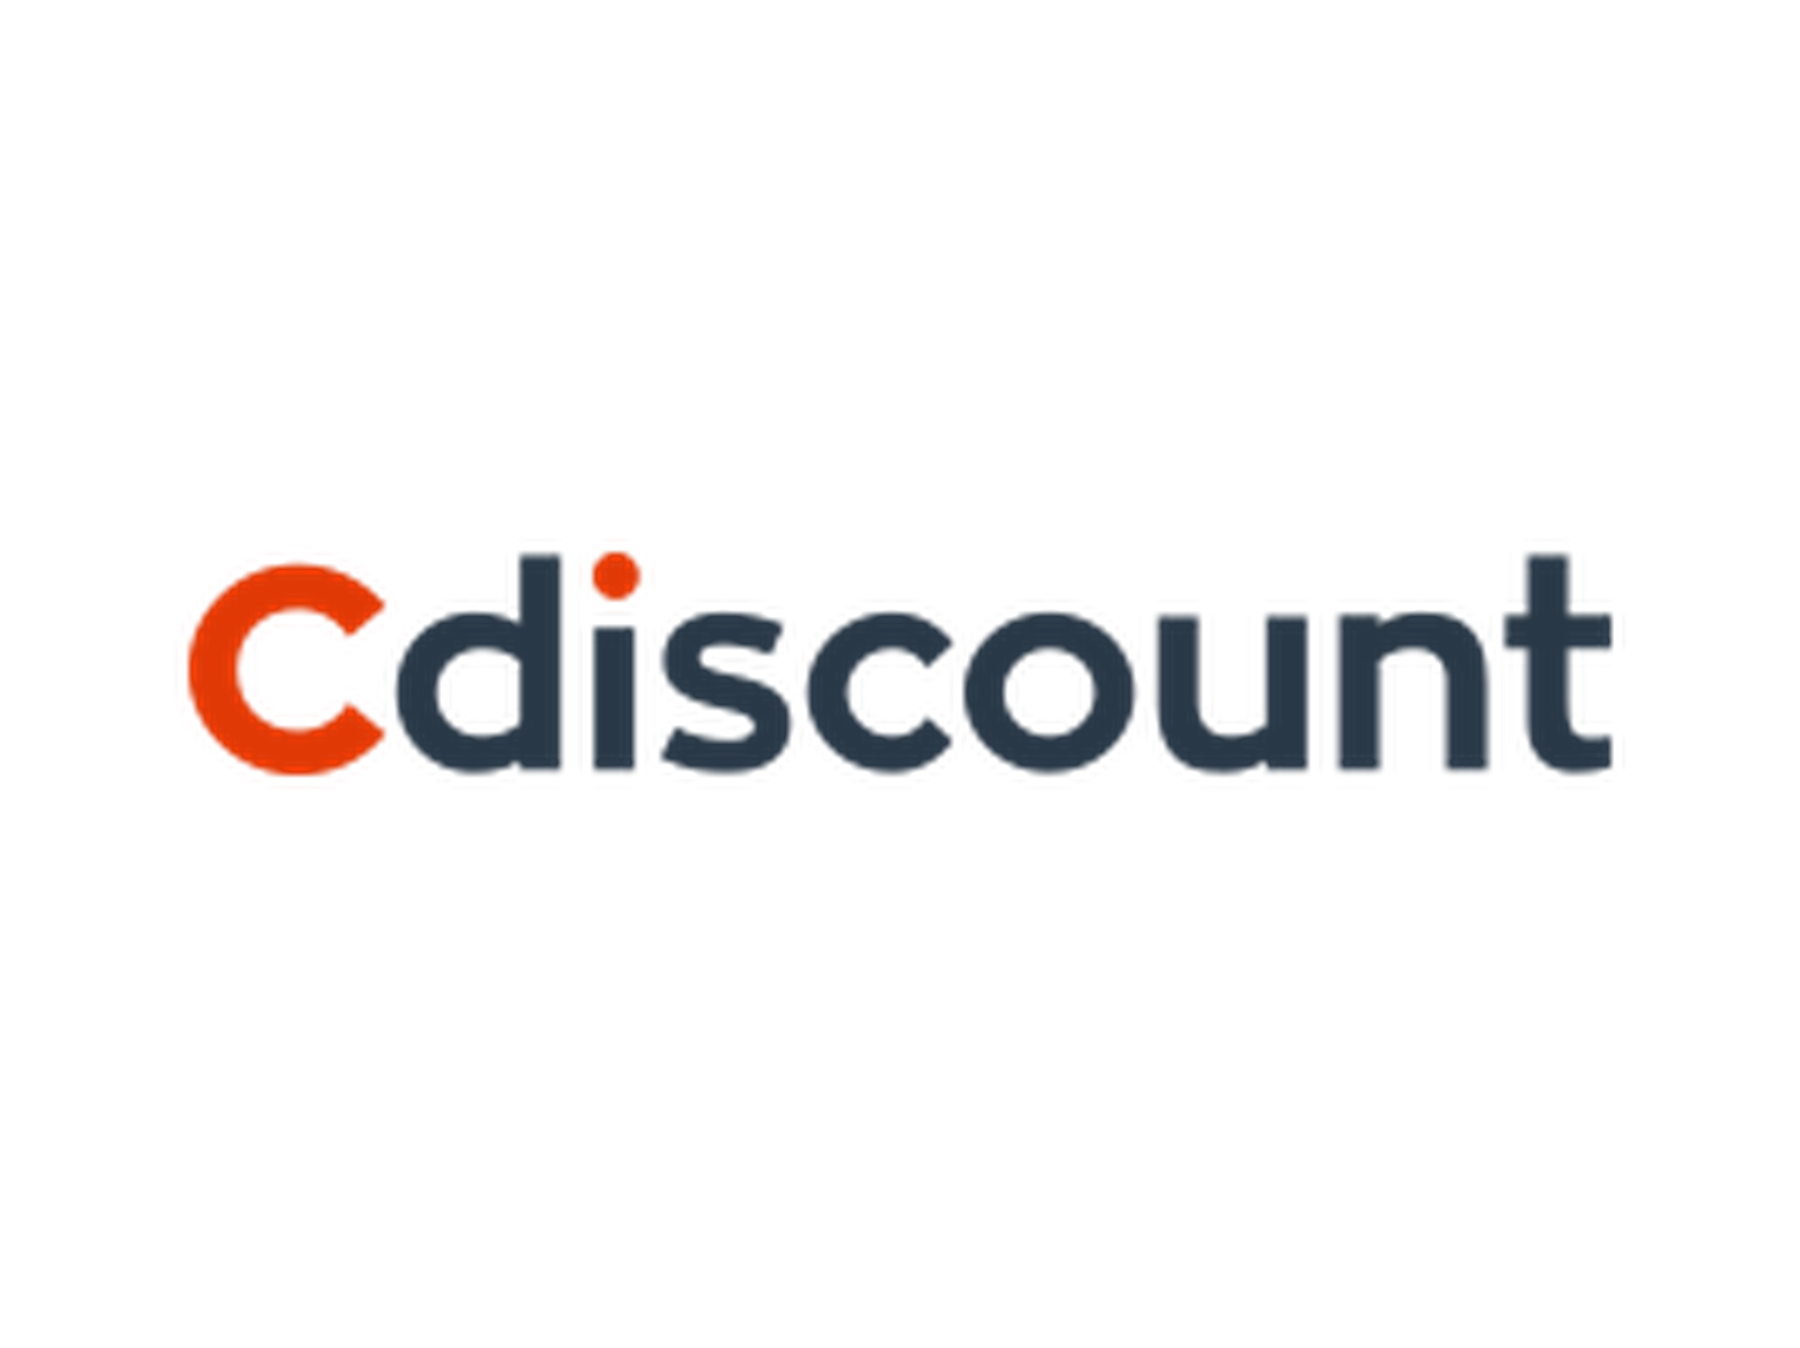 Code promo Cdiscount